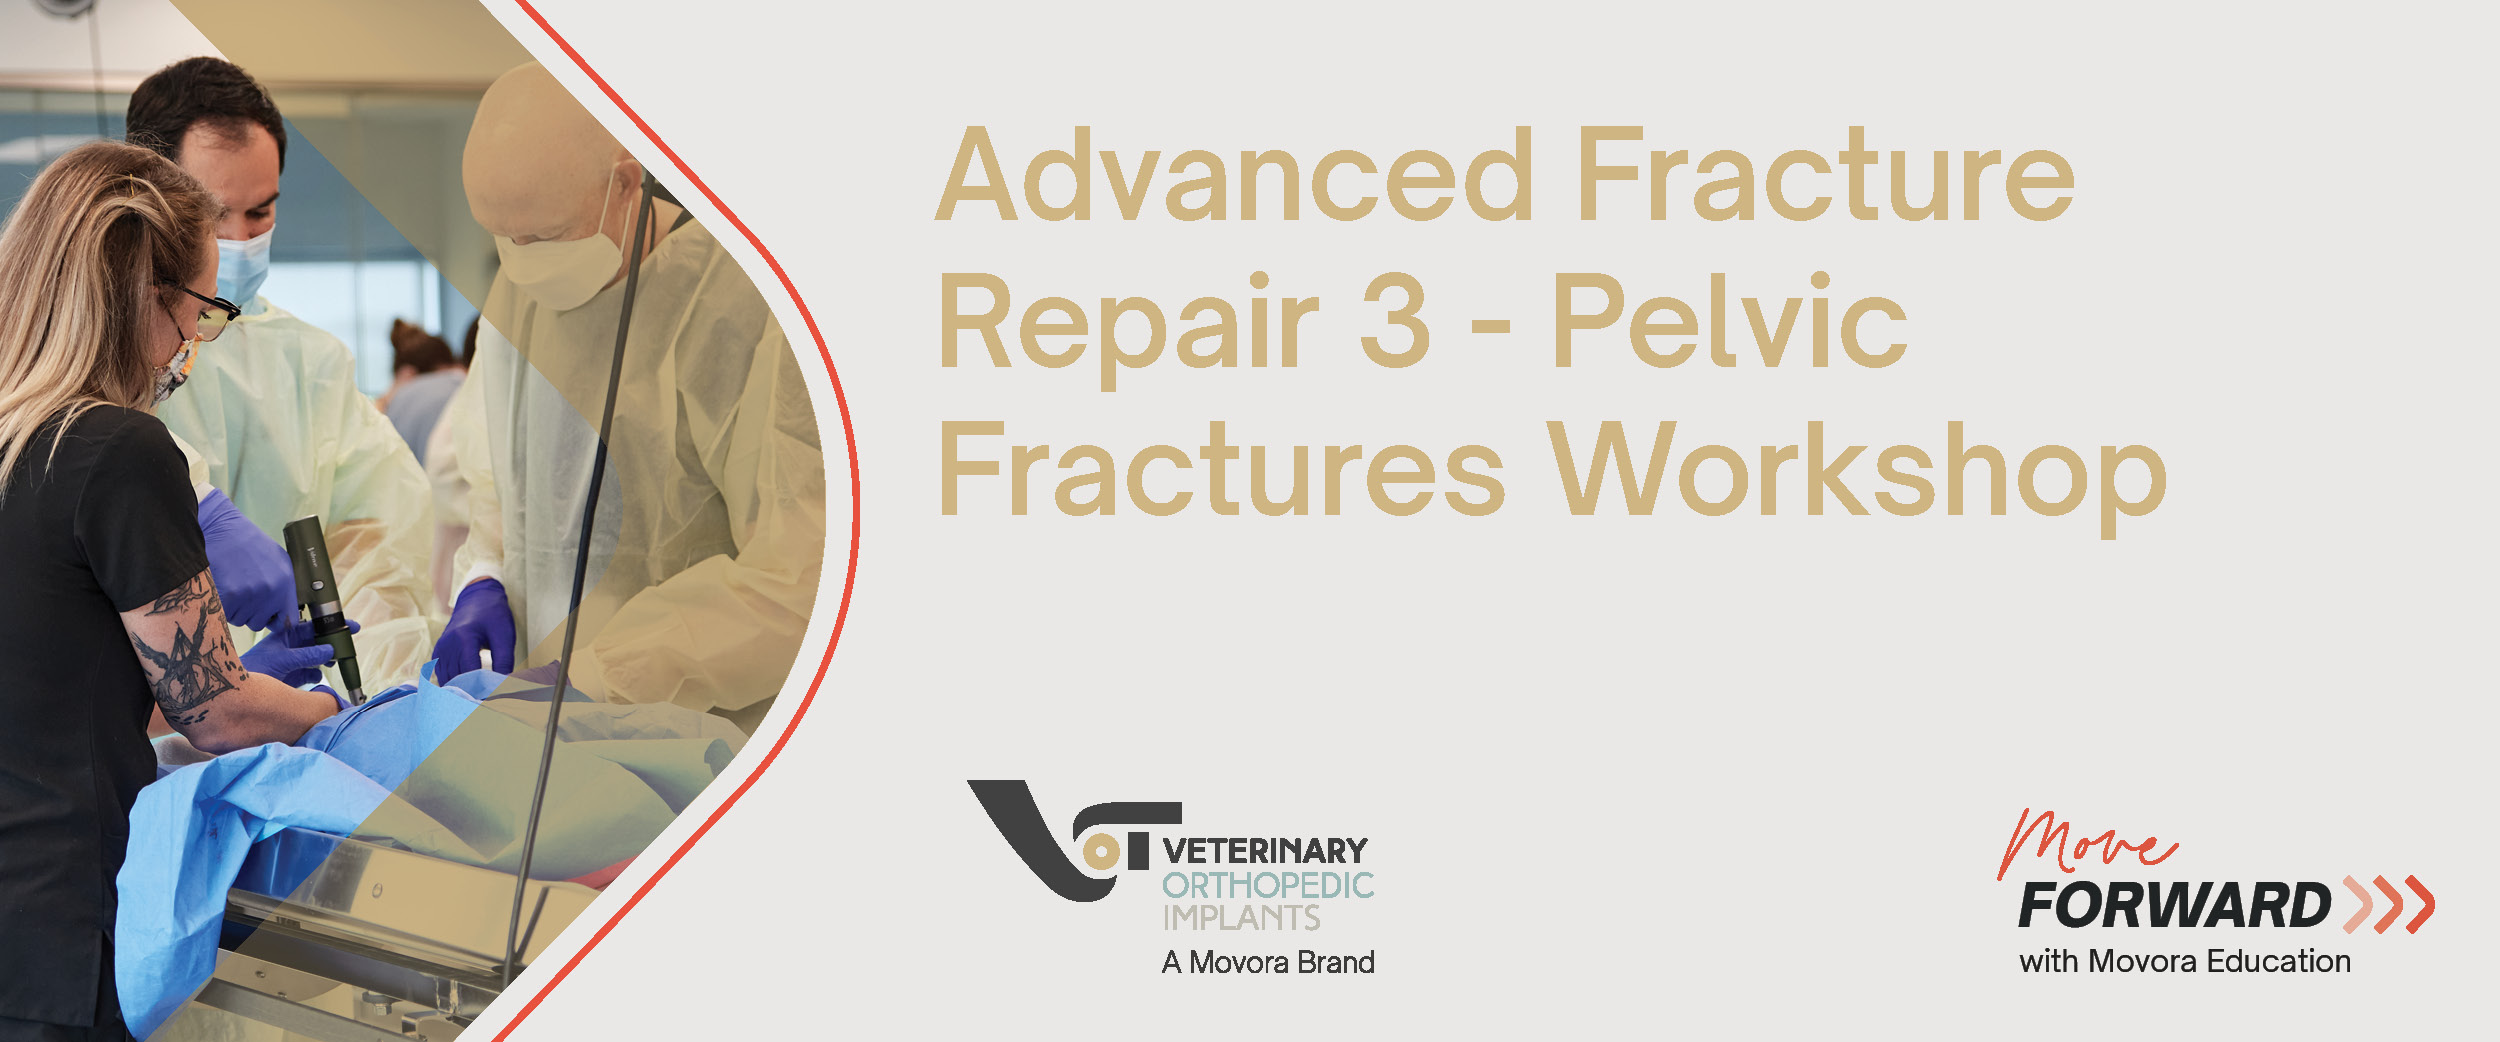 Advanced Fracture 3 Workshop Banner